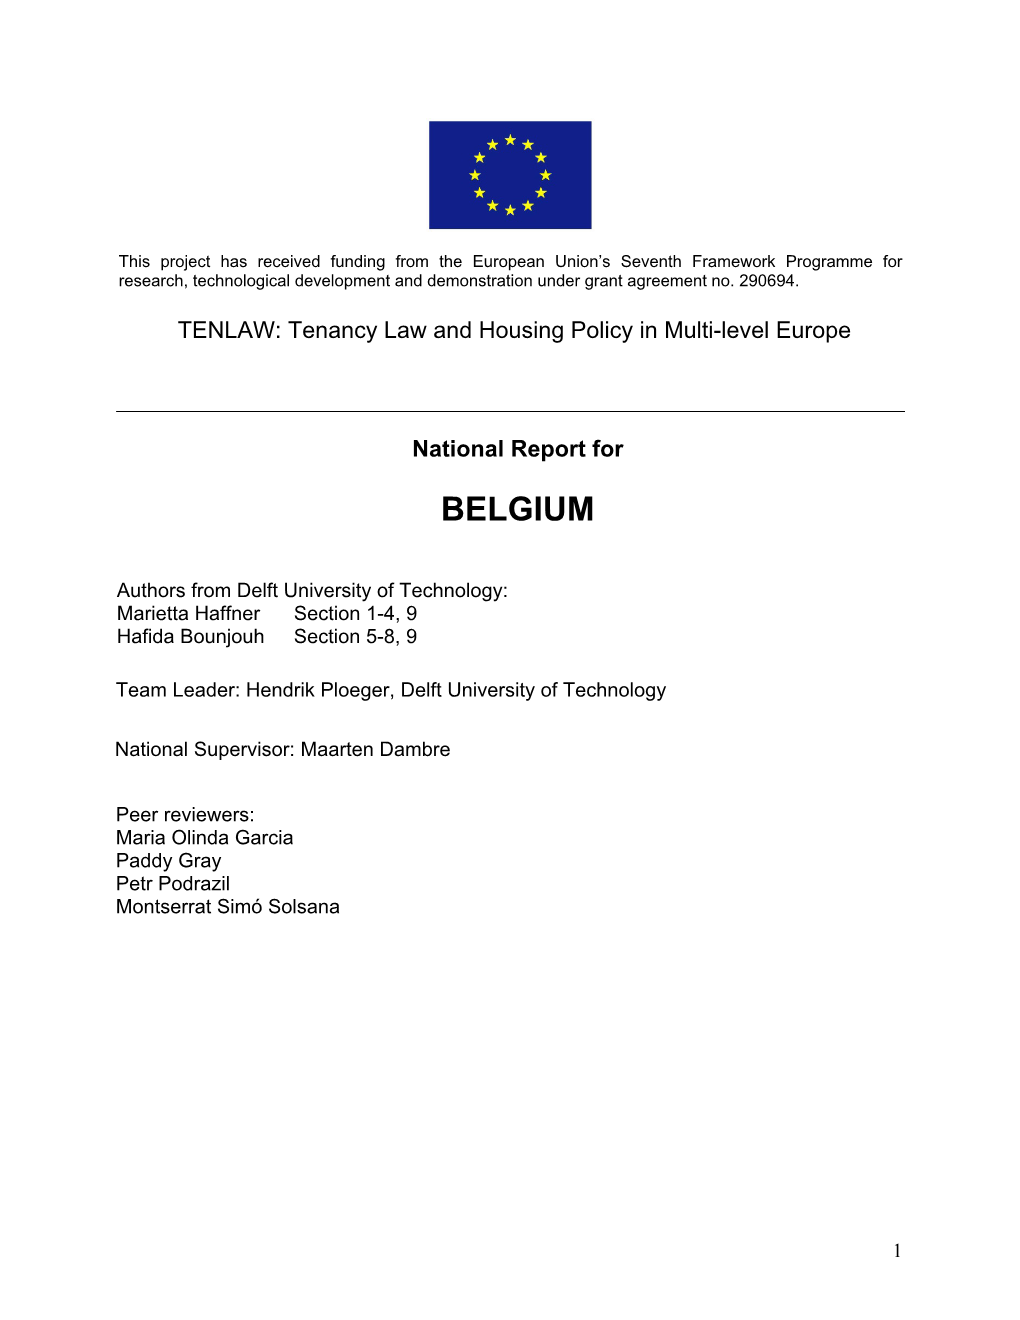 National Report for BELGIUM